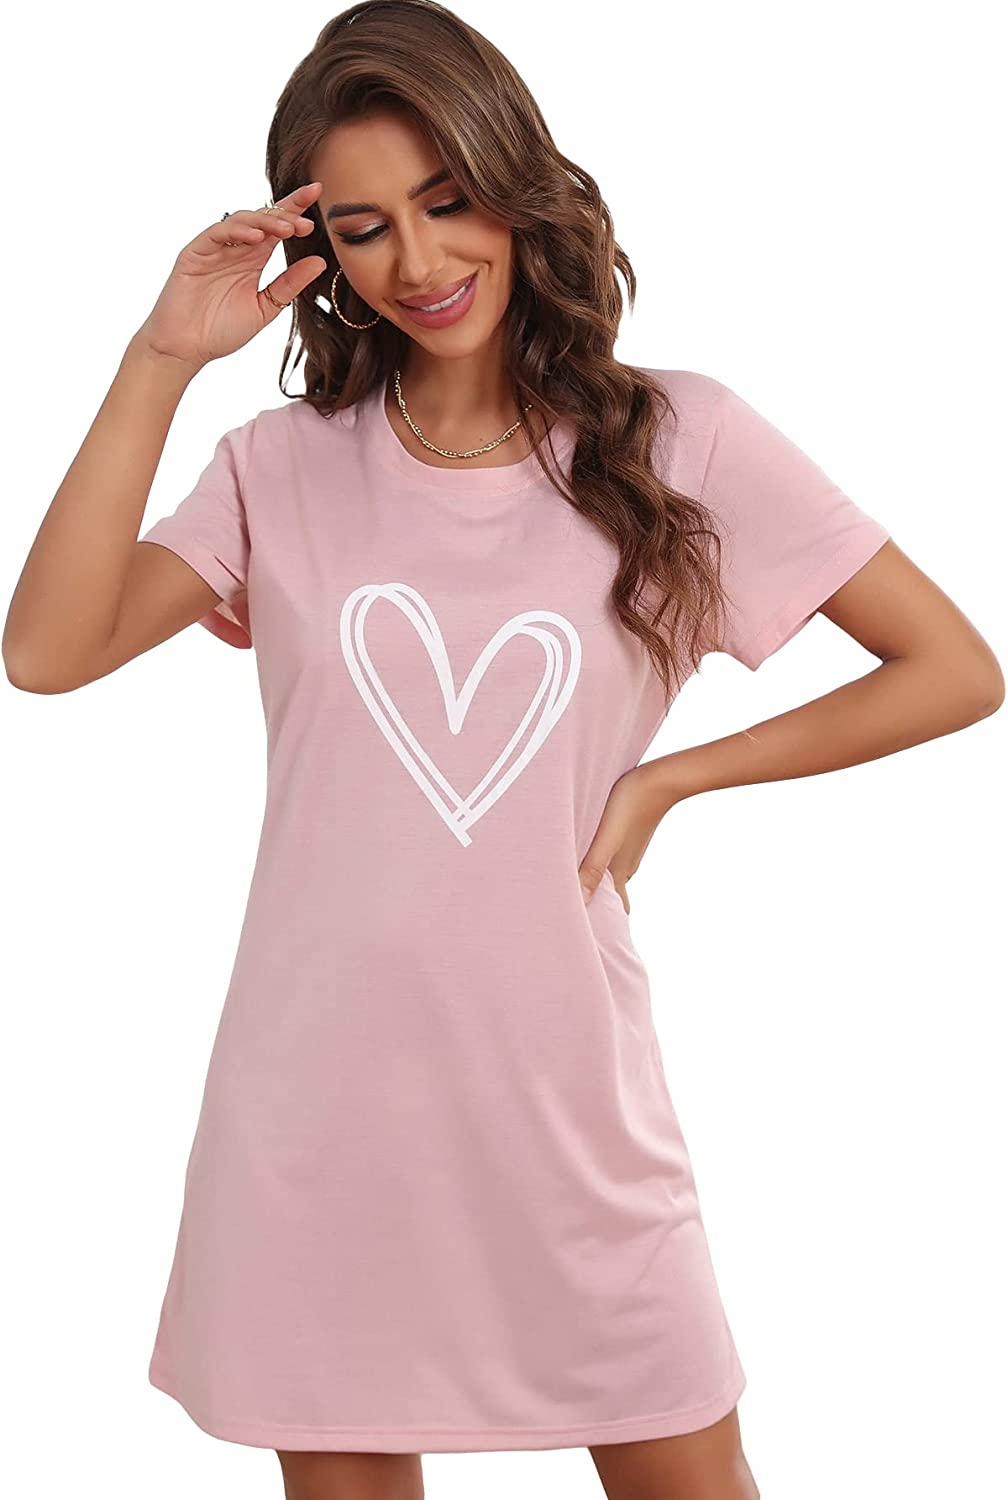 Women's Funny Lingerie Nightgown Cute Print Tshirt Sleepdress